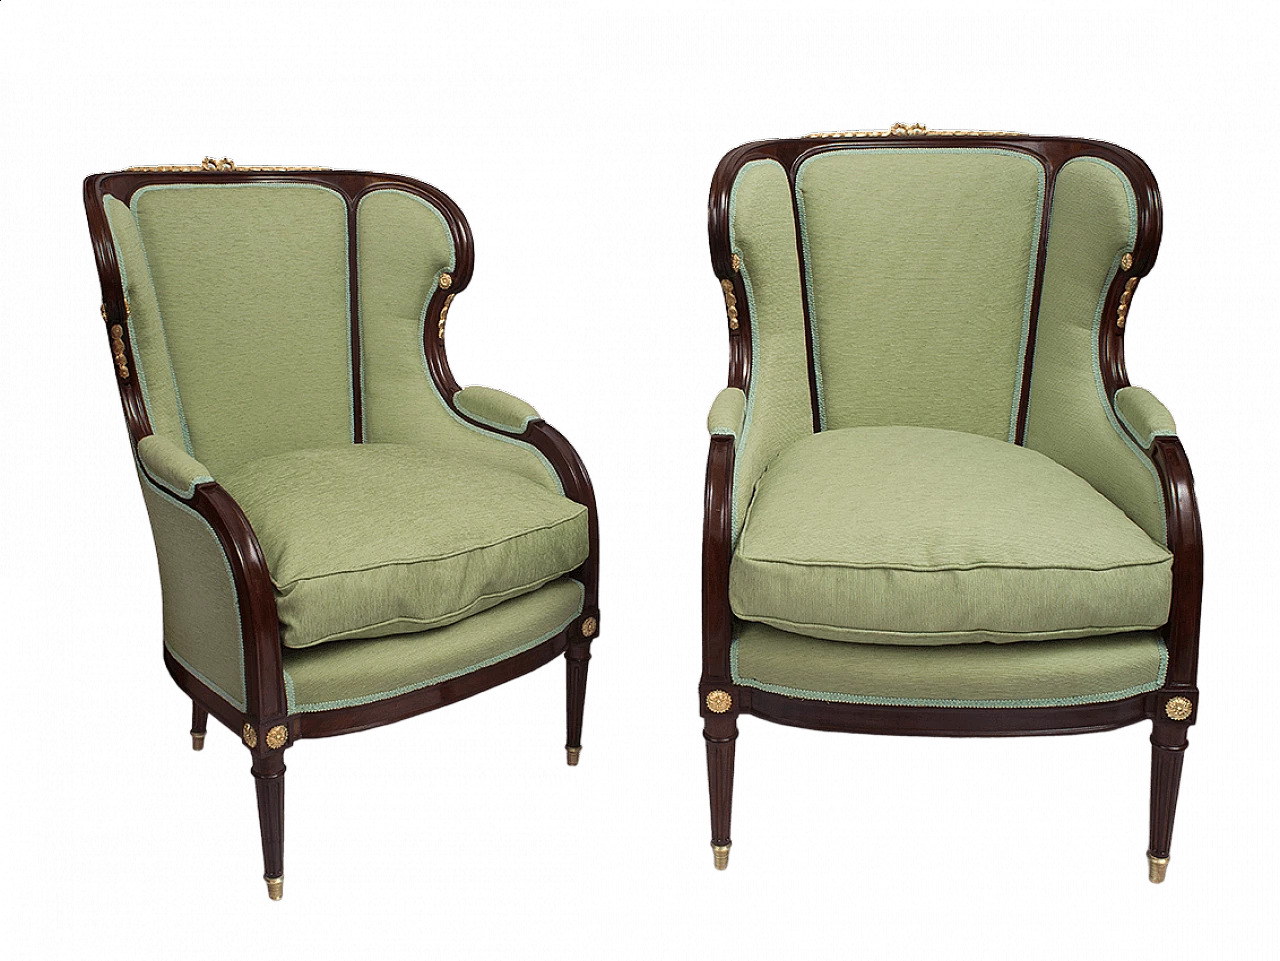 Pair of Napoleon III style armchairs in mahogany, 19th century 1470221